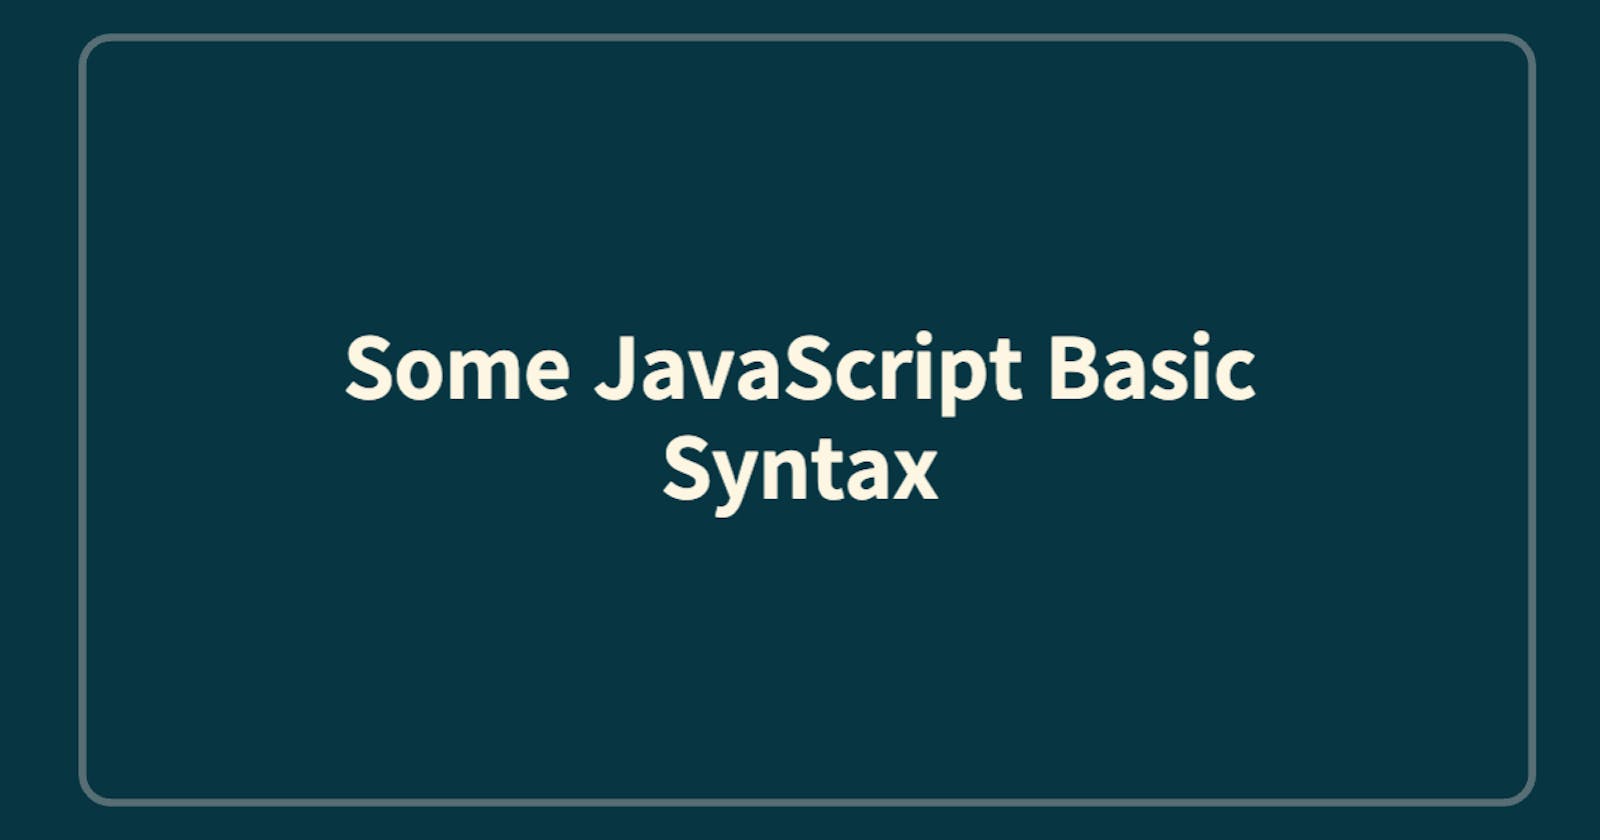 Some JavaScript Basic Syntax